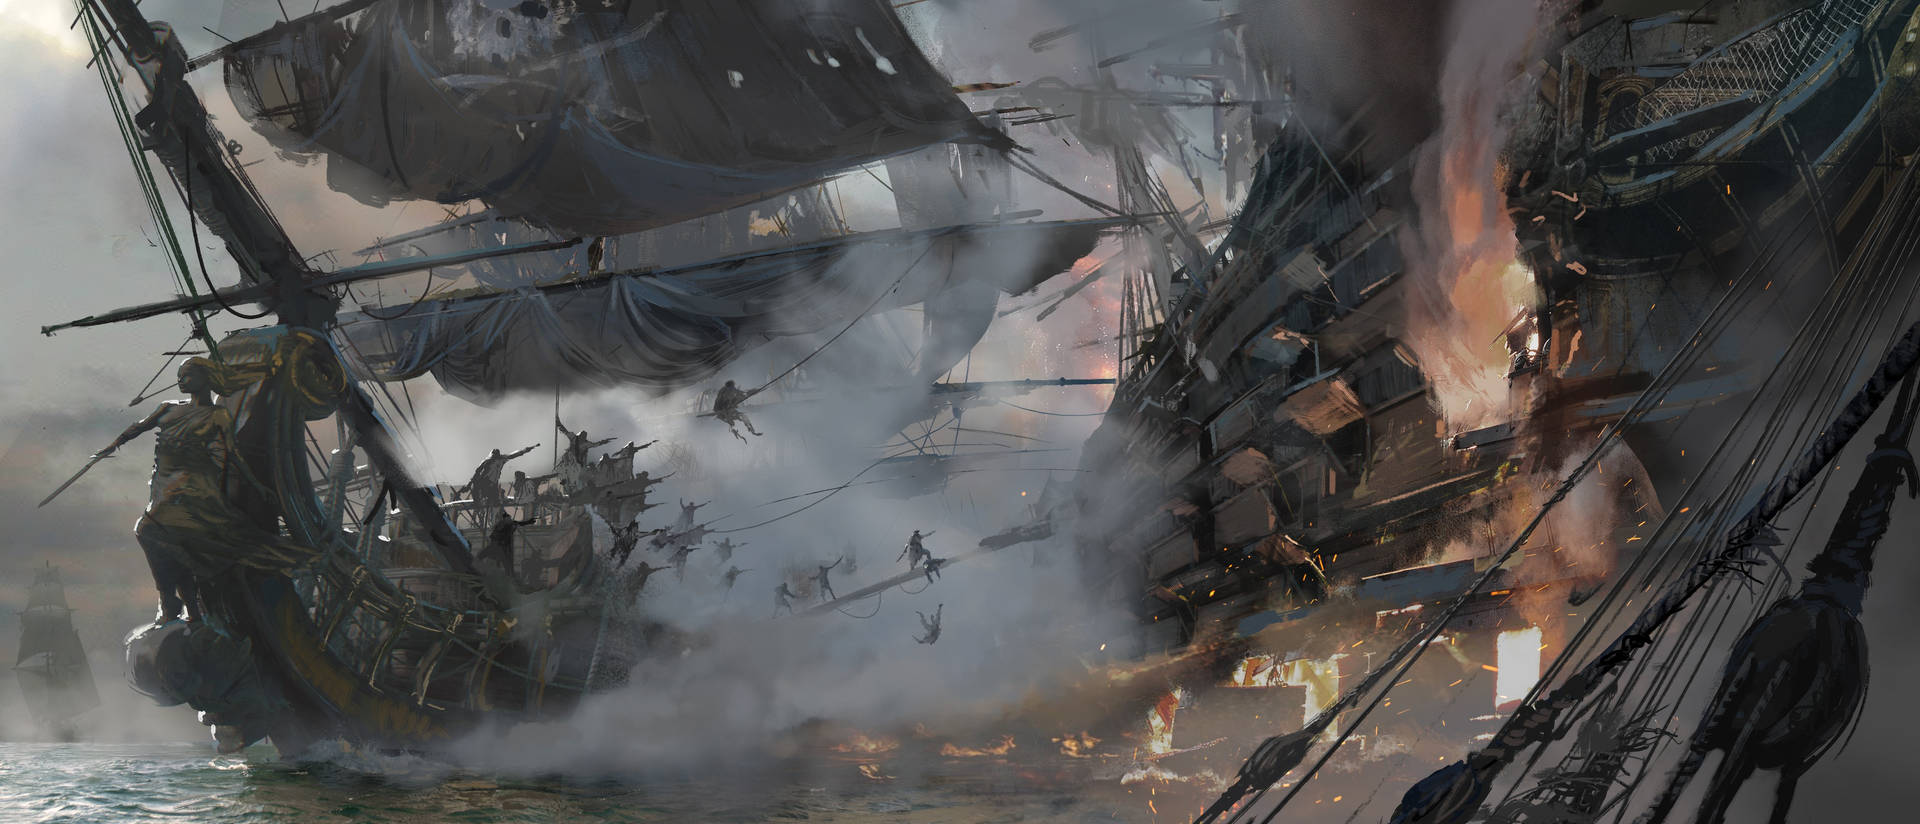 4K Pirate Ship During Battle Wallpaper